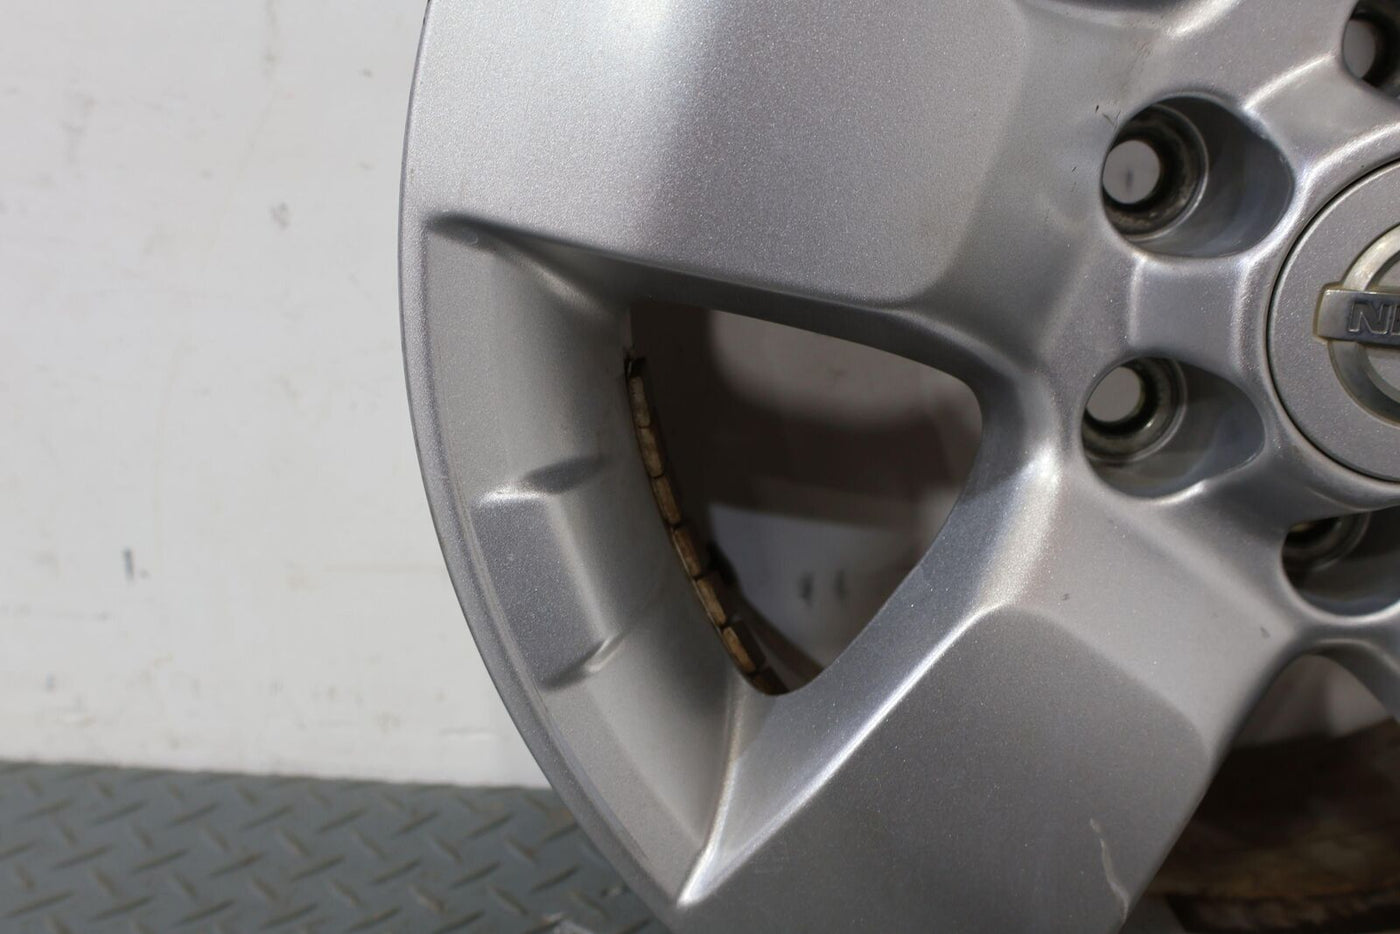 09-14 Nissan Xterra 16" OEM Rear Wheel (Face Marks) Silver With Center Cap